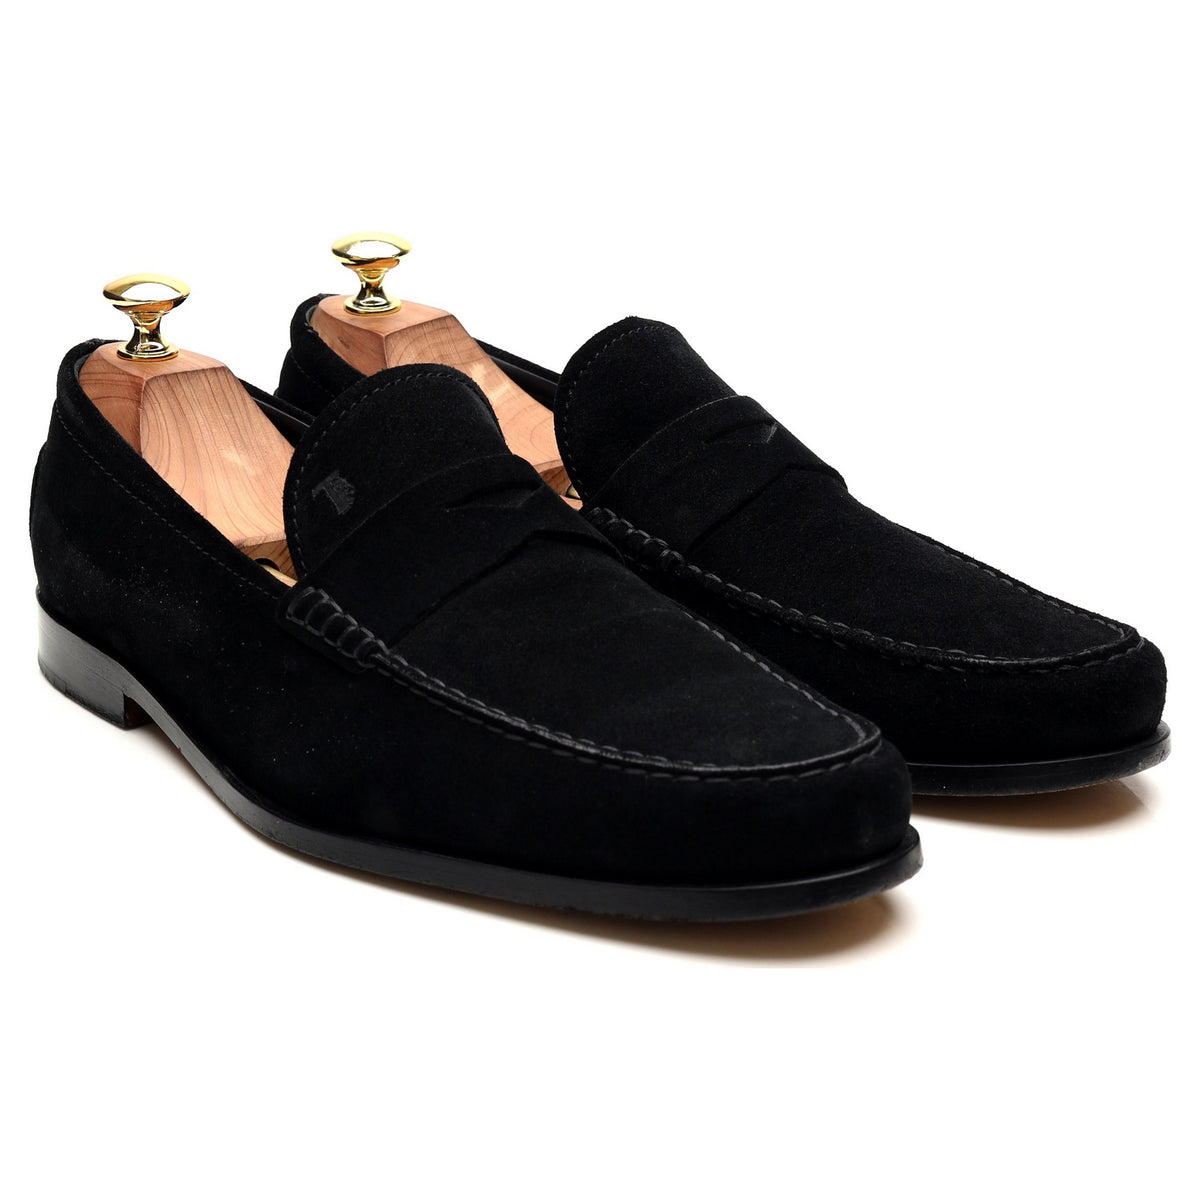 Black Suede Loafers UK 8.5